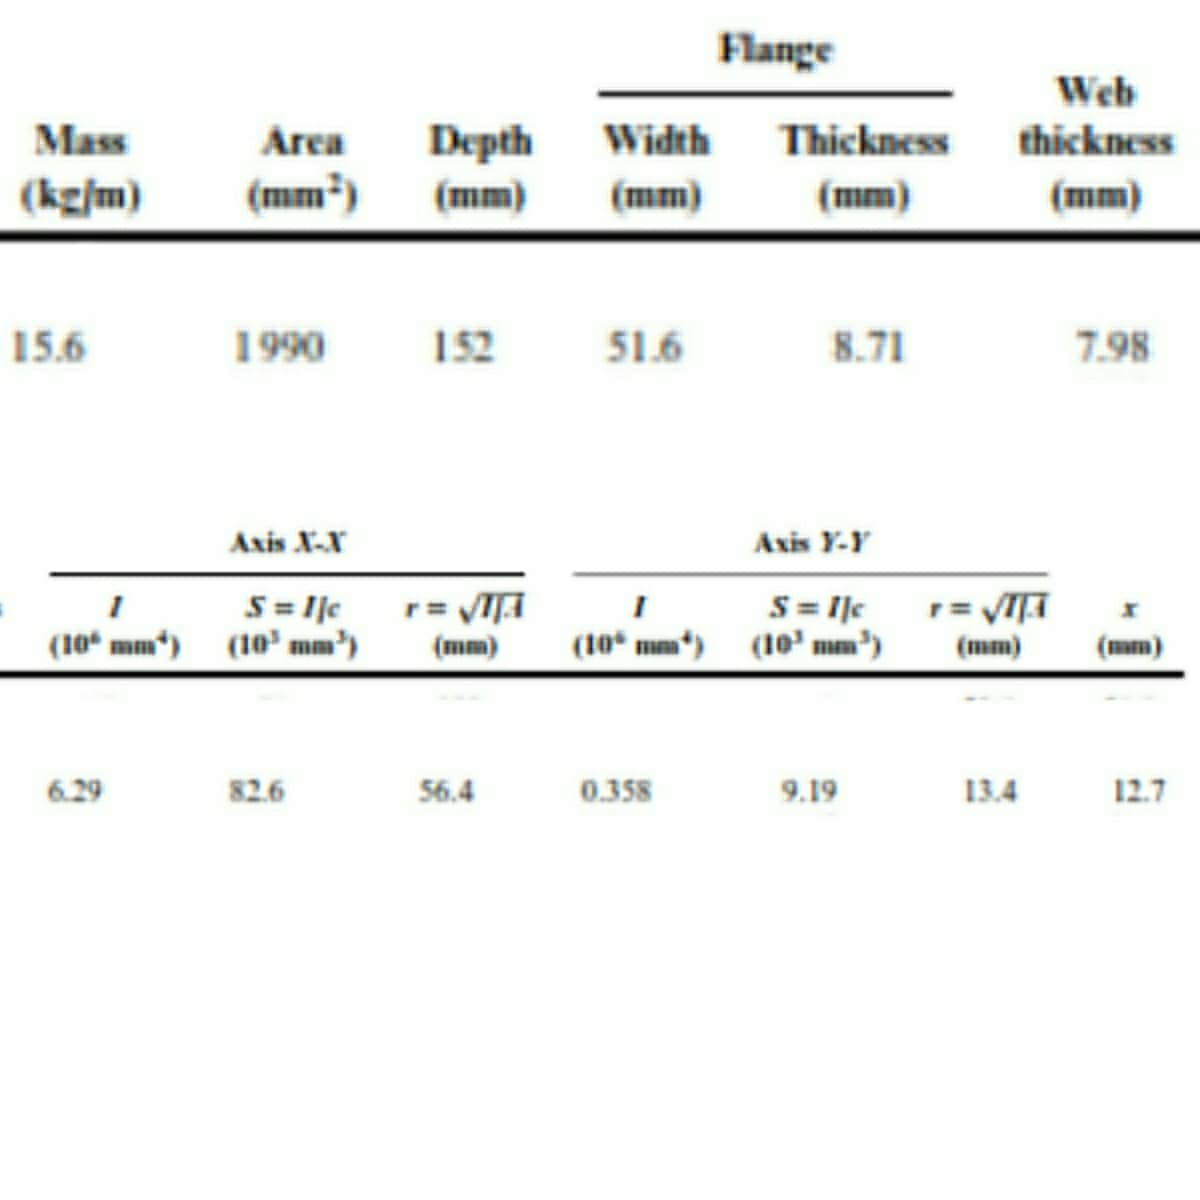 Flange
Web
thickness
Mass
Area
Depth
Width
Thickness
(kz/m)
(mm³)
(mm)
(mm)
(mm)
(mm)
15.6
1990
152
51.6
8.71
7.98
Axis X-X
Axis Y-Y
S = 1jc
(10 mm) (10 mm')
S = IJc
(10* mm) (10' mm²)
(mm)
(mm)
(mm)
6.29
82.6
56.4
0.358
9.19
13.4
12.7
